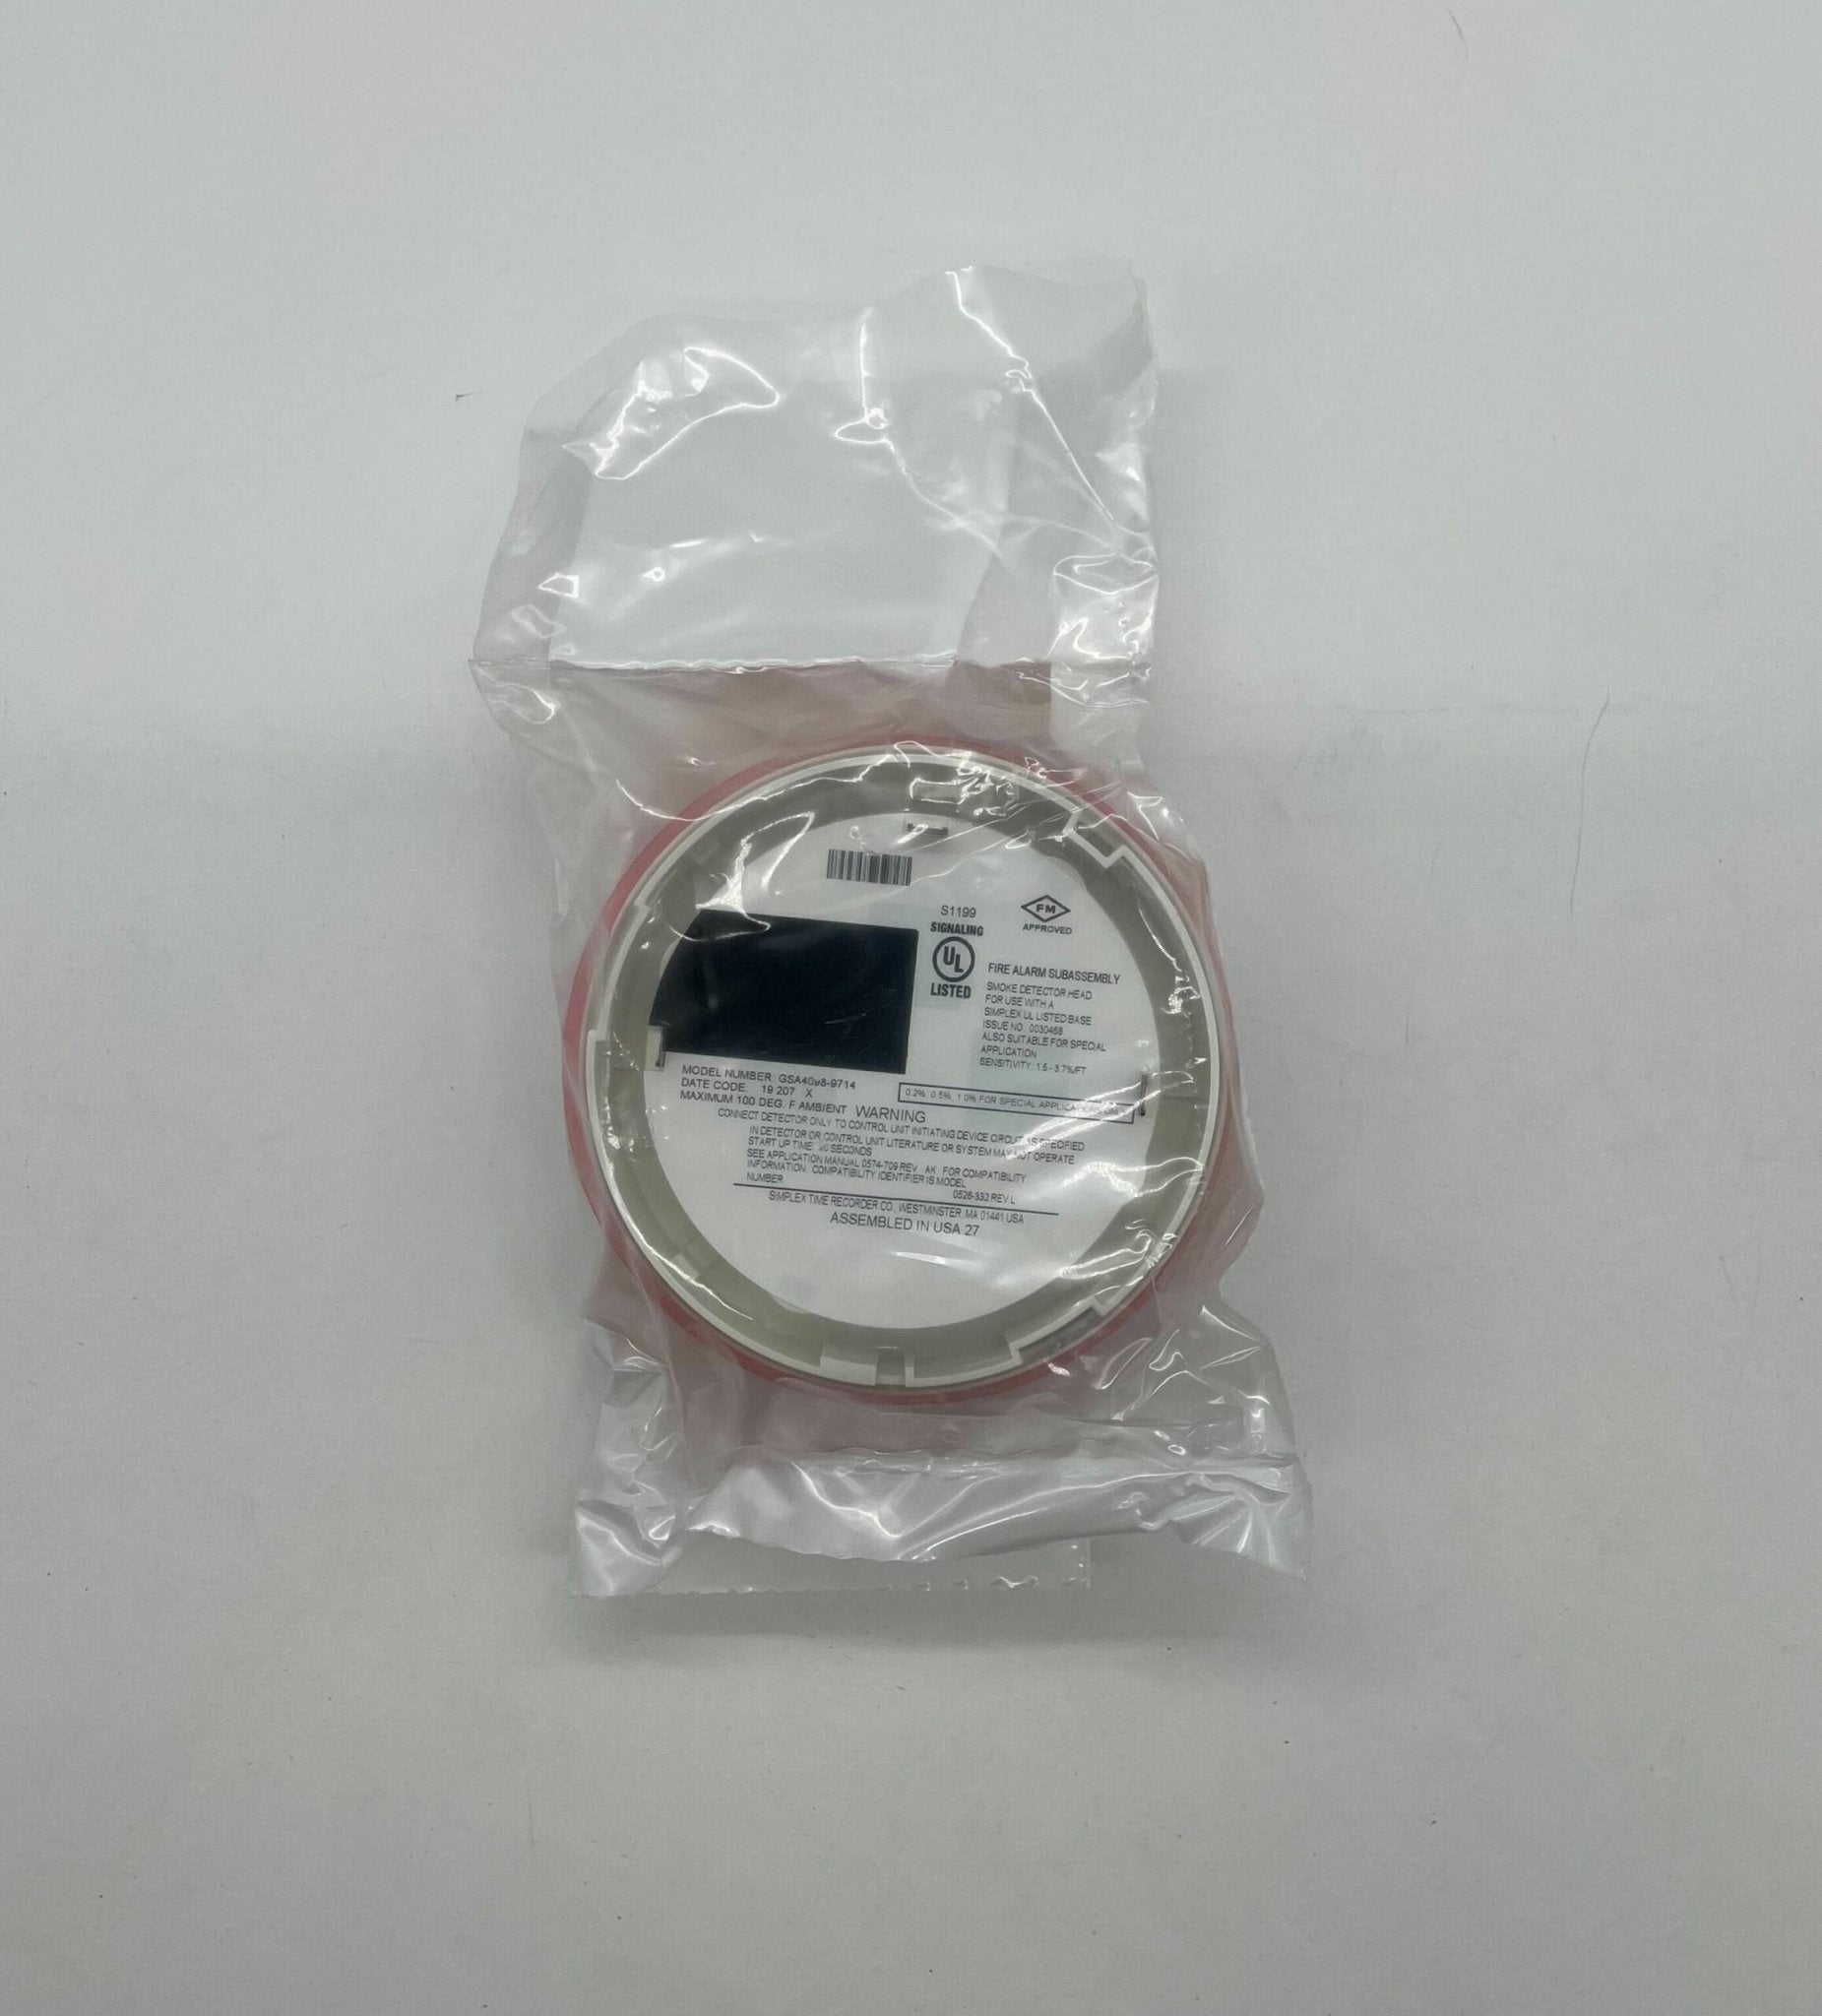 Simplex GSA4098-9714 Photo-Sensor Smoke Detector - The Fire Alarm Supplier